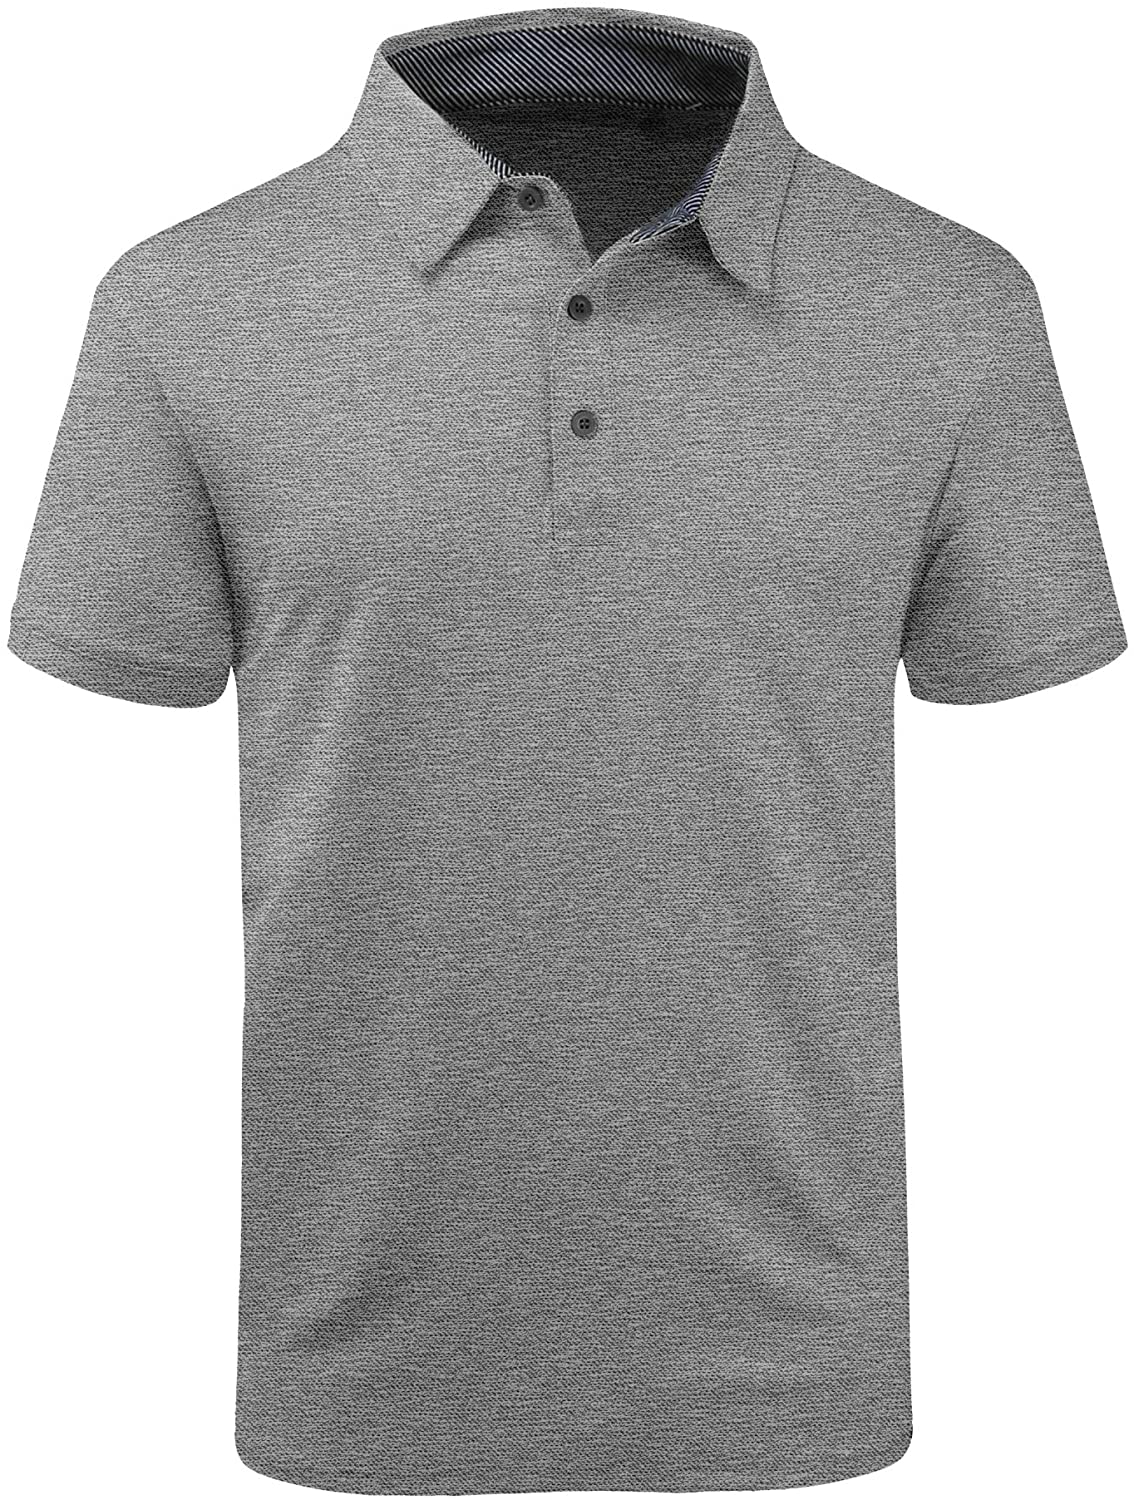 V VALANCH Mens Golf Polo Shirts Long/Short Sleeve Moisture Wicking  Performance S eBay